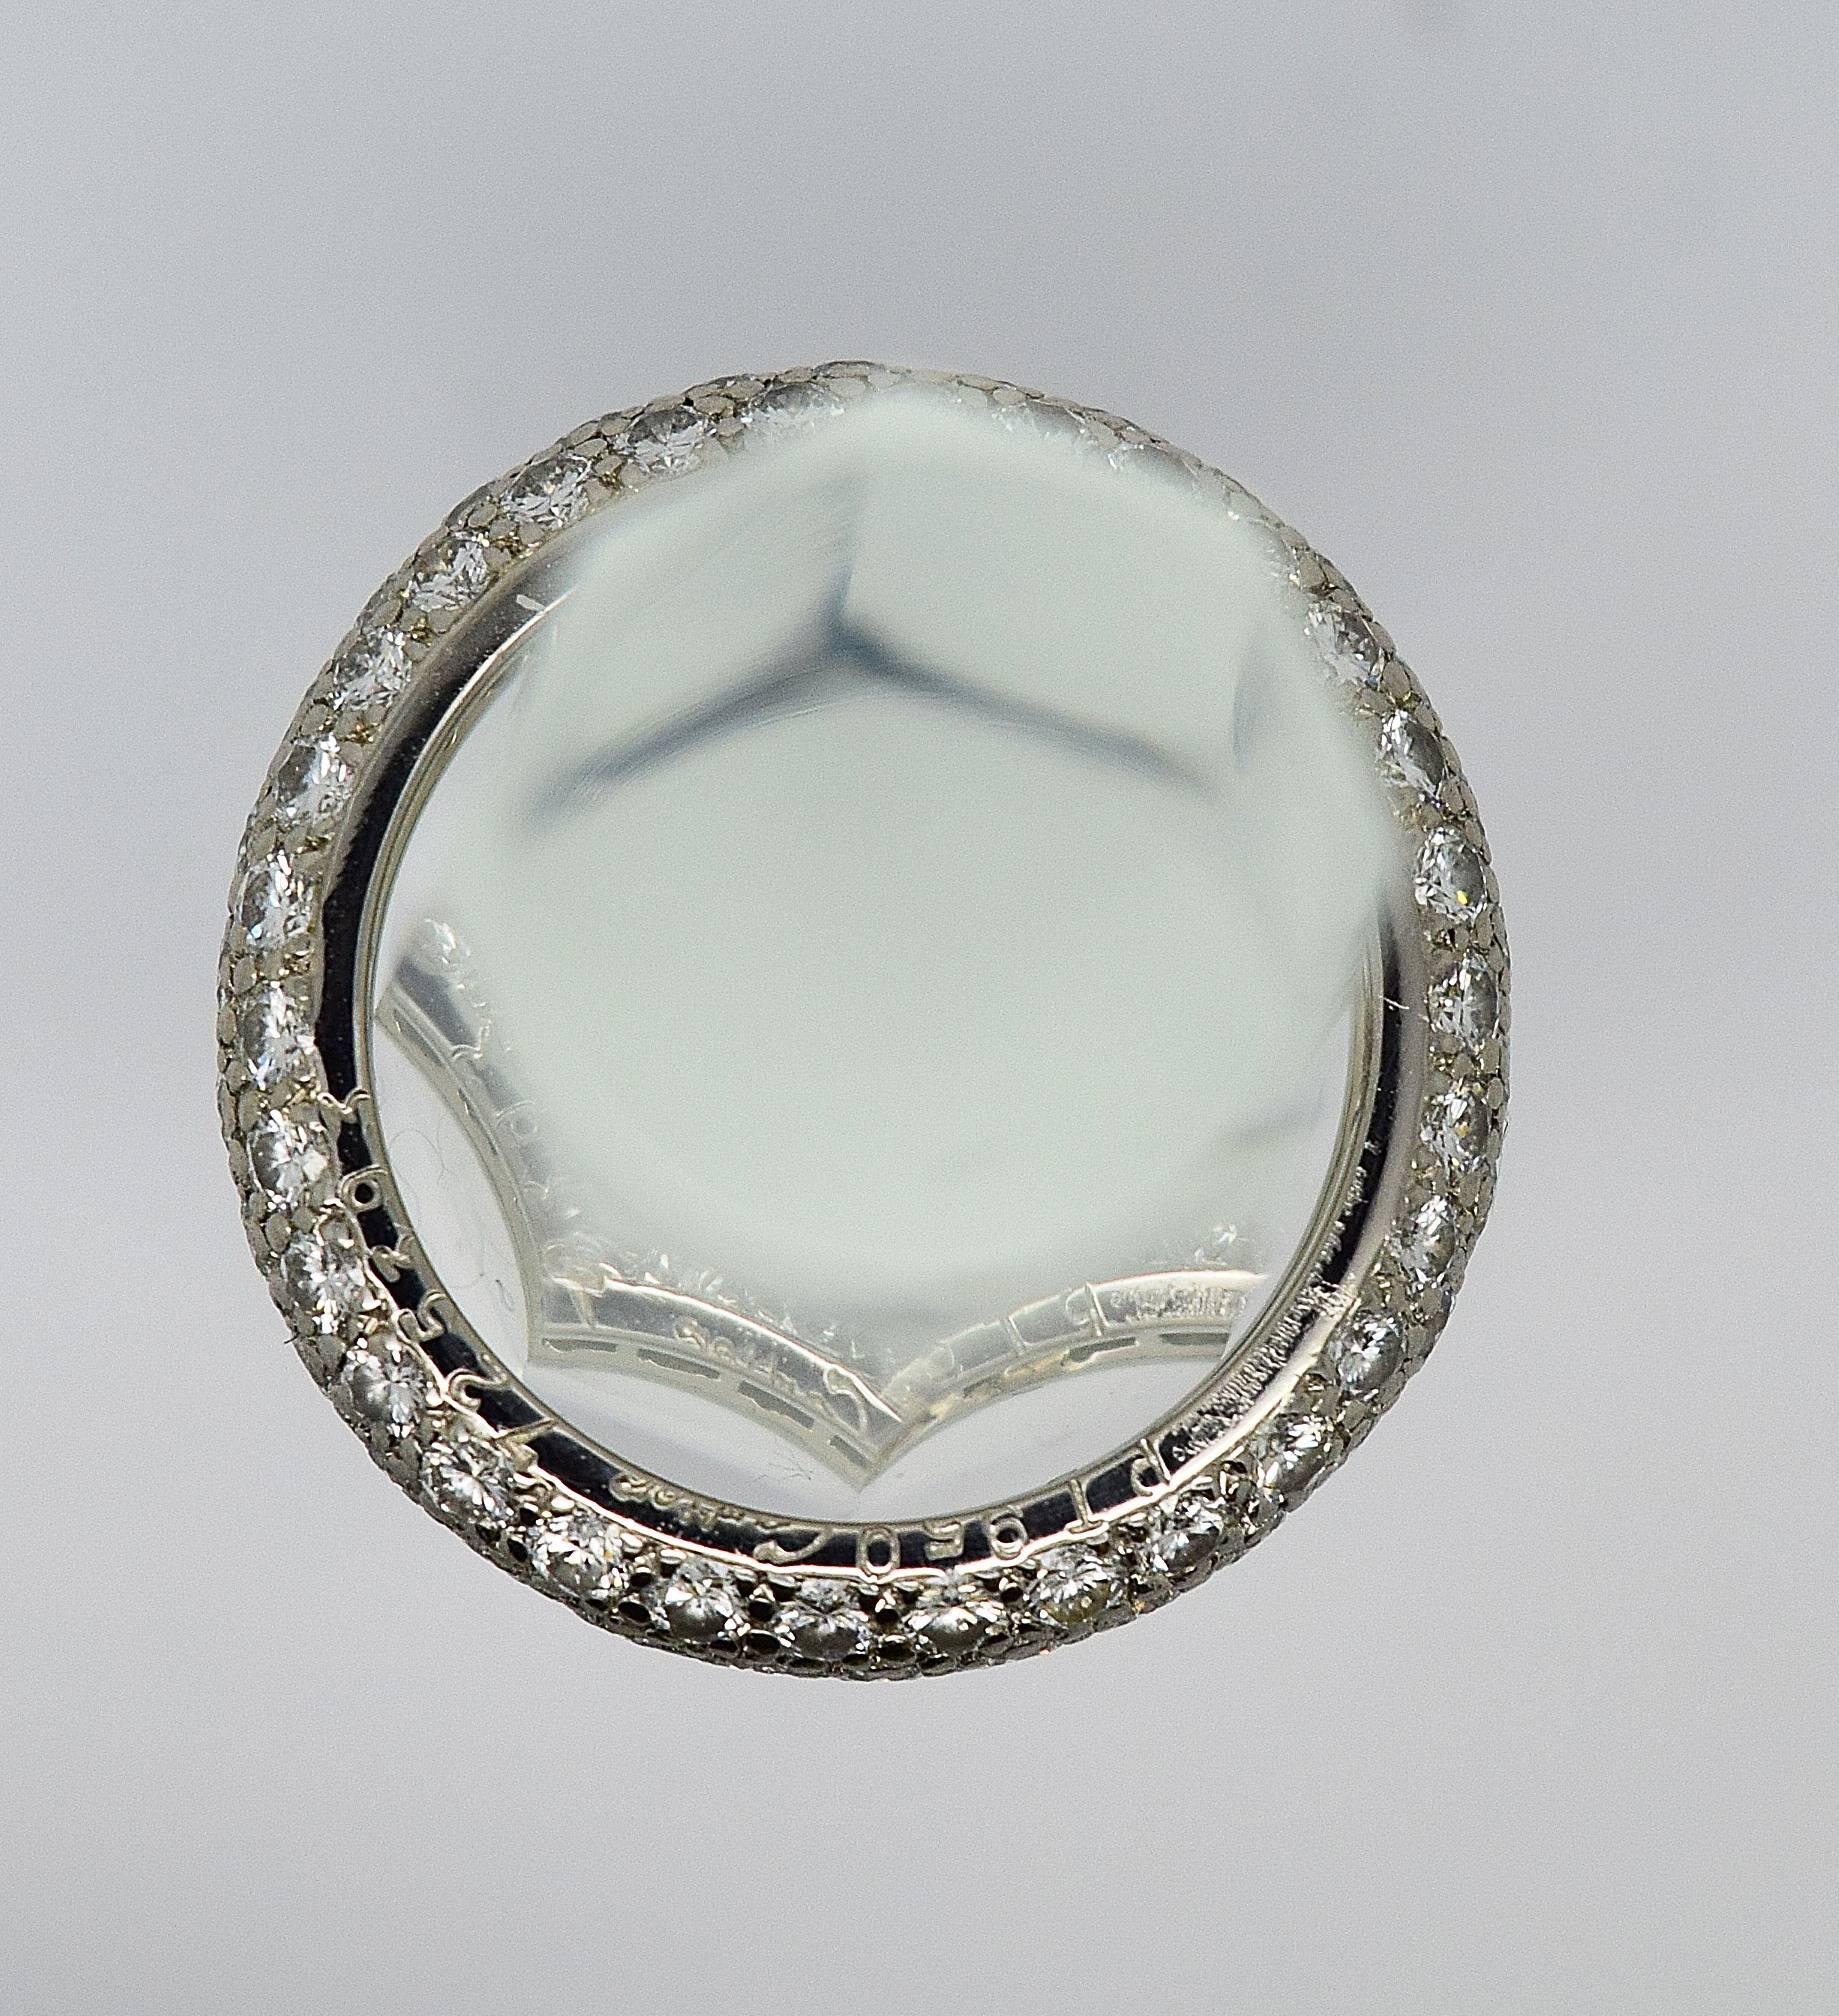 Cartier Paris Pave Diamond Platinum Wedding Band Ring For Sale 1